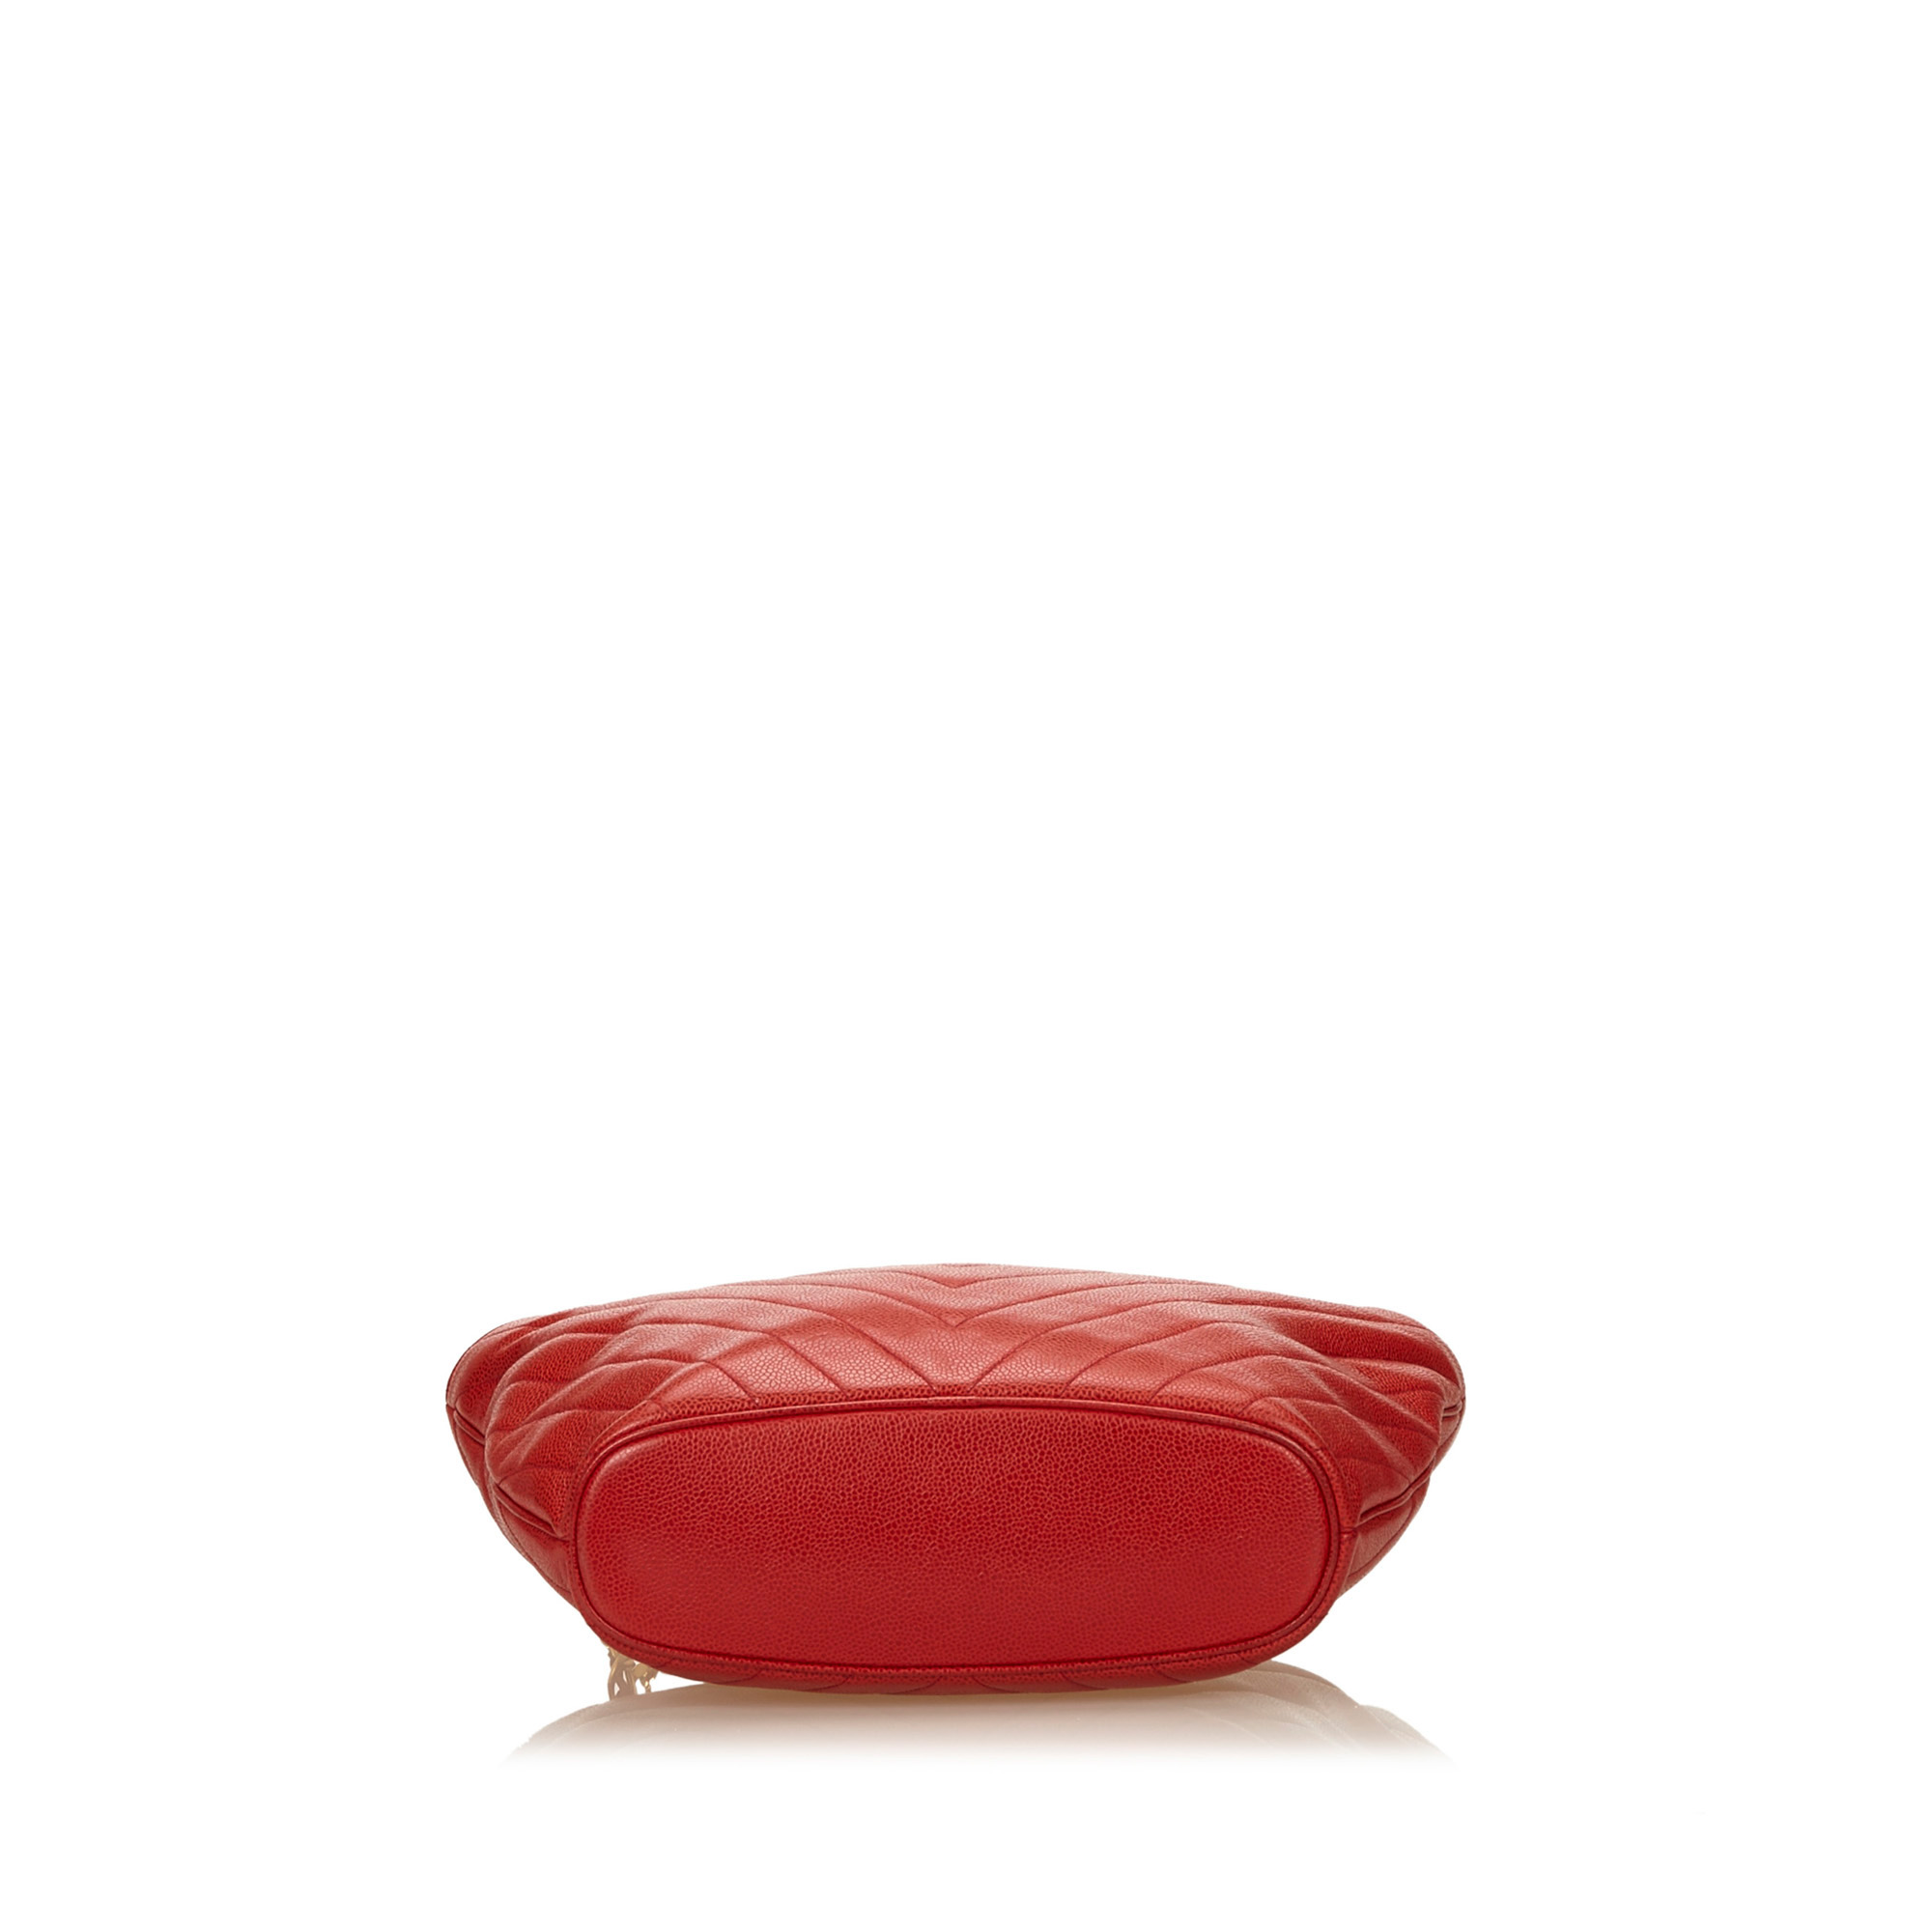 Pre-Loved Chanel Red Caviar Leather Chevron Shoulder Bag France | eBay